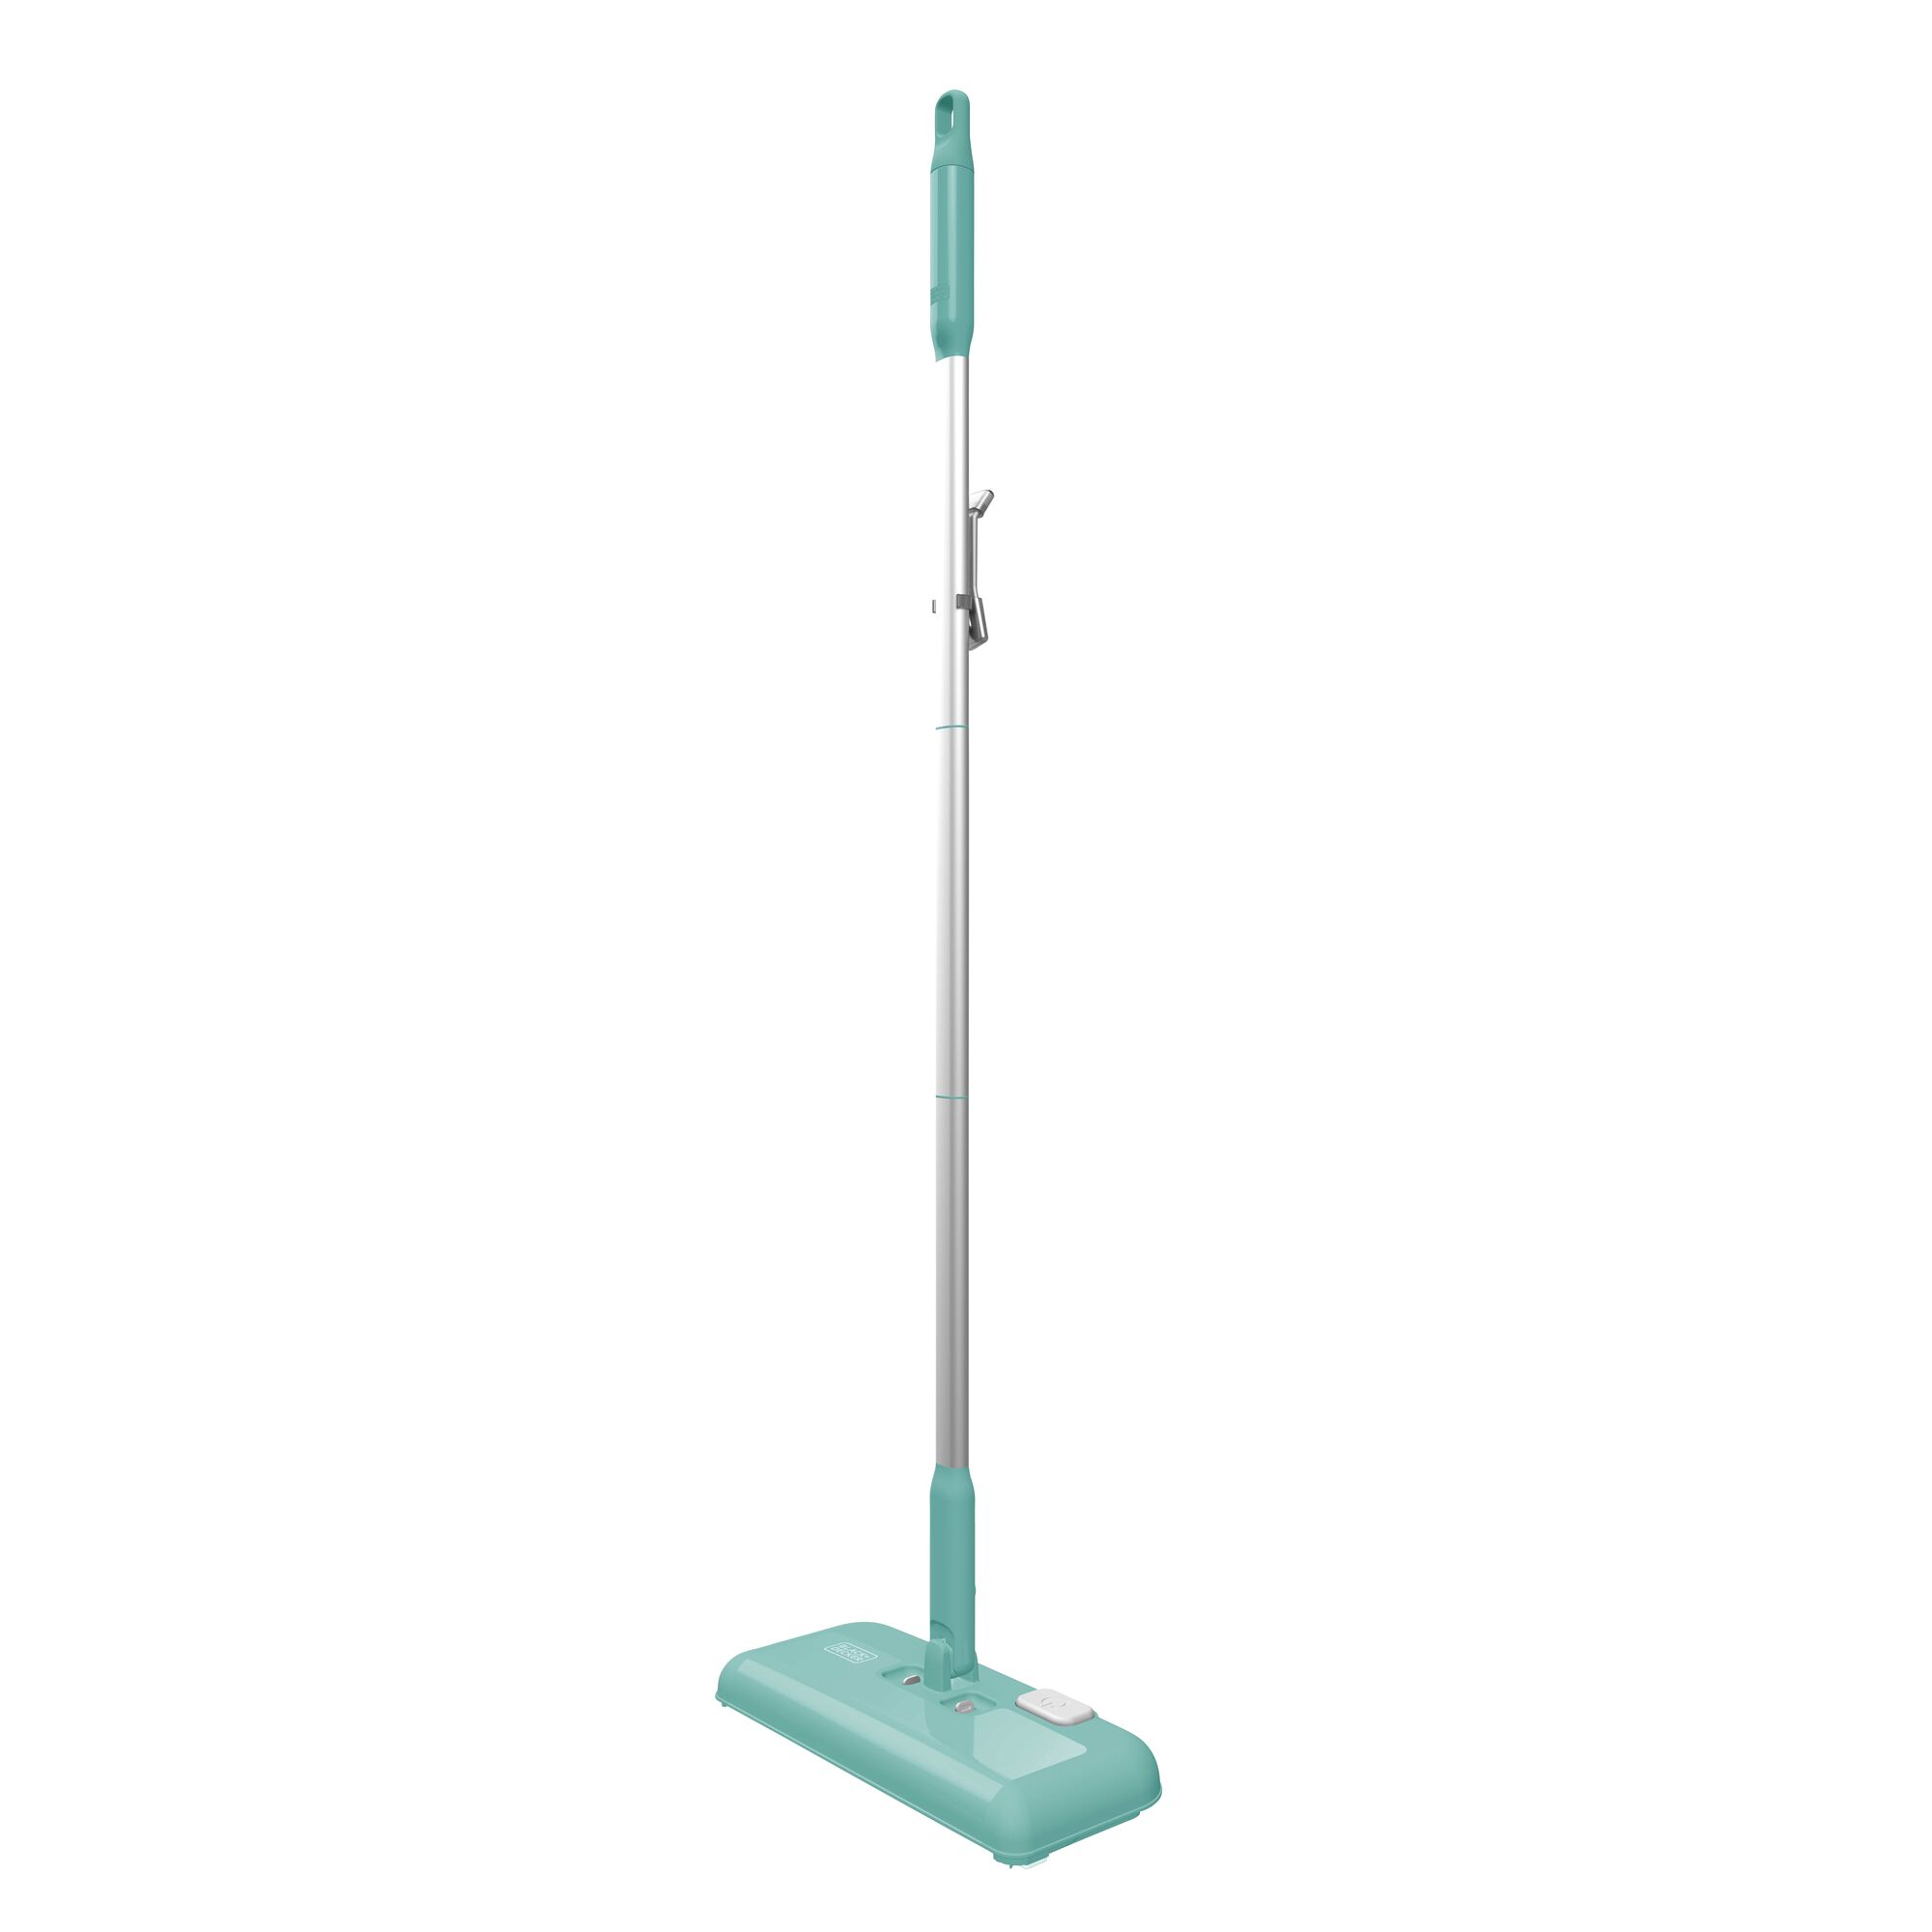 Profile of powered floor sweeper.